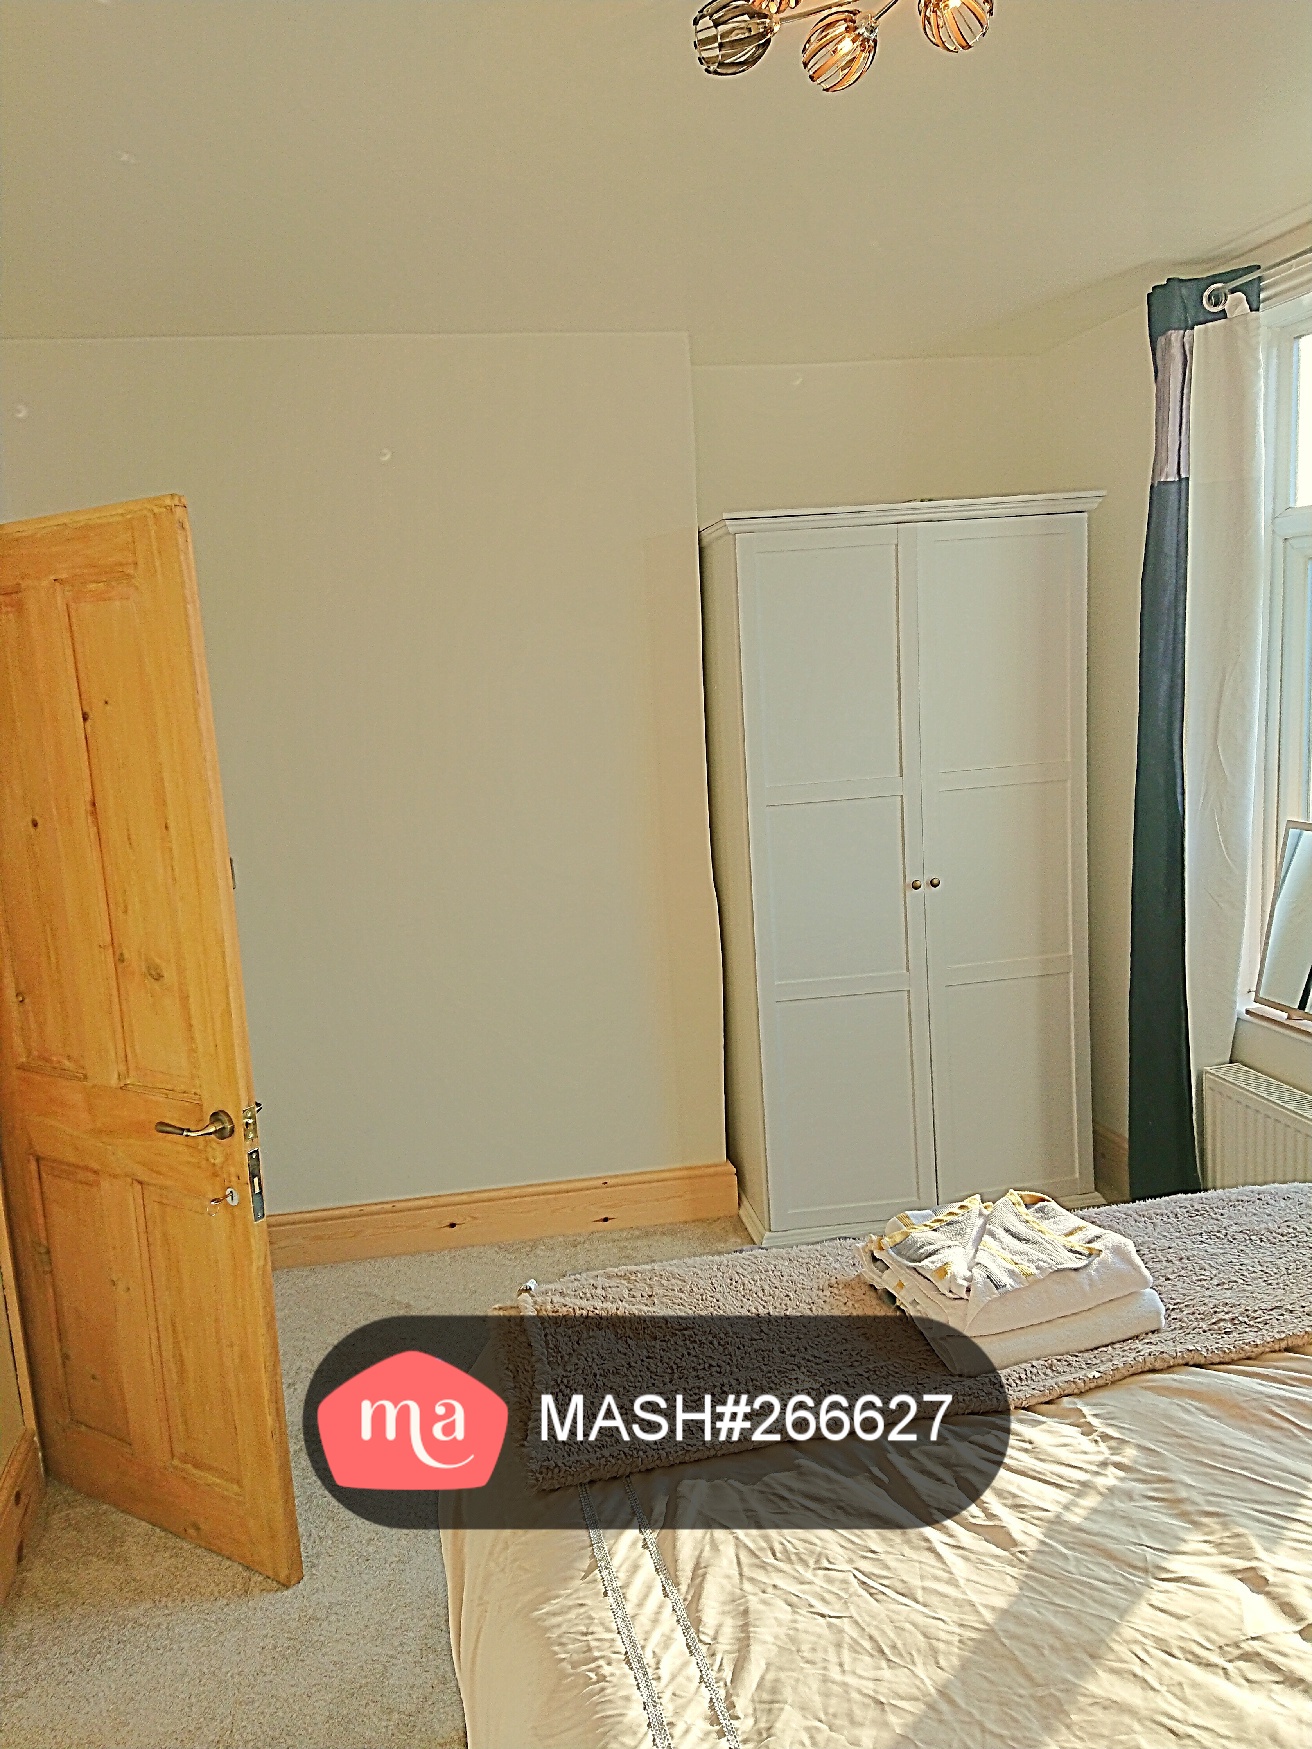 2 Bedroom Terraced to rent in York - Mashroom